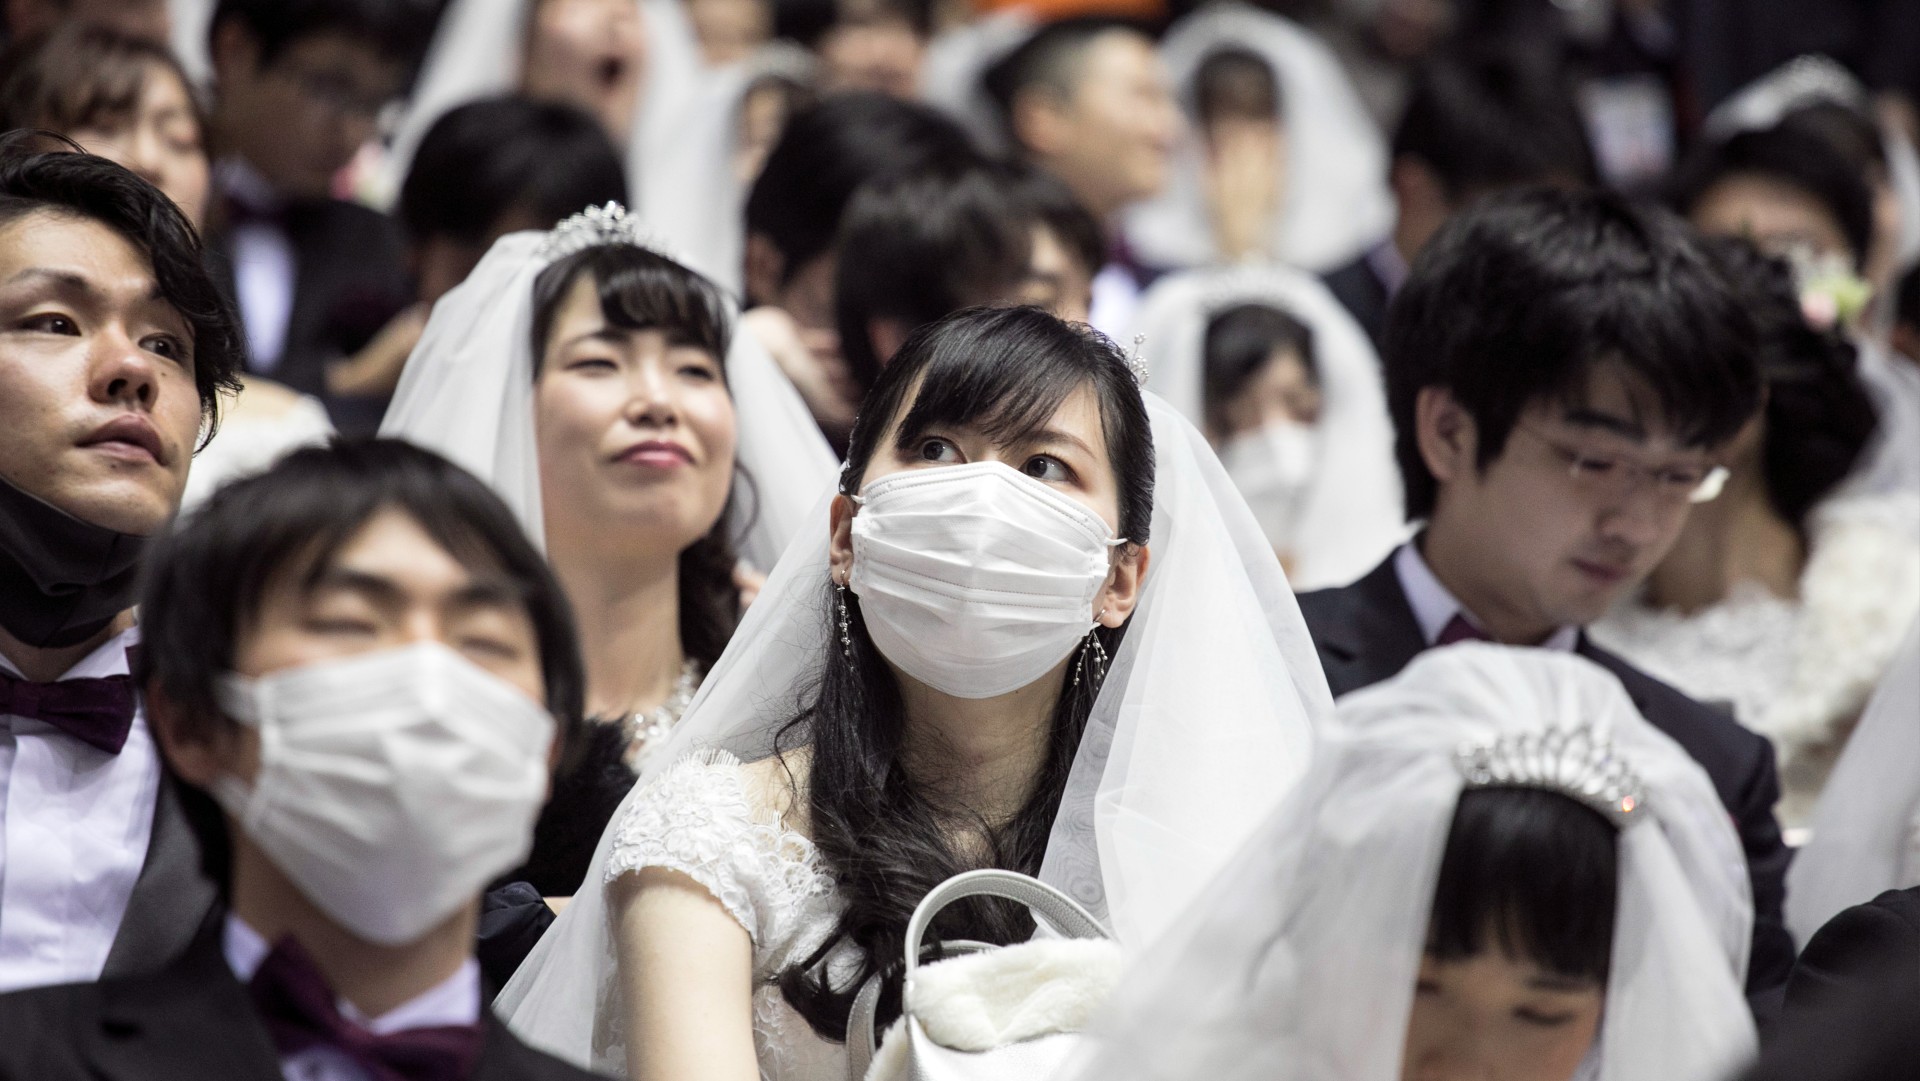 A mass Moonies wedding in South Korea